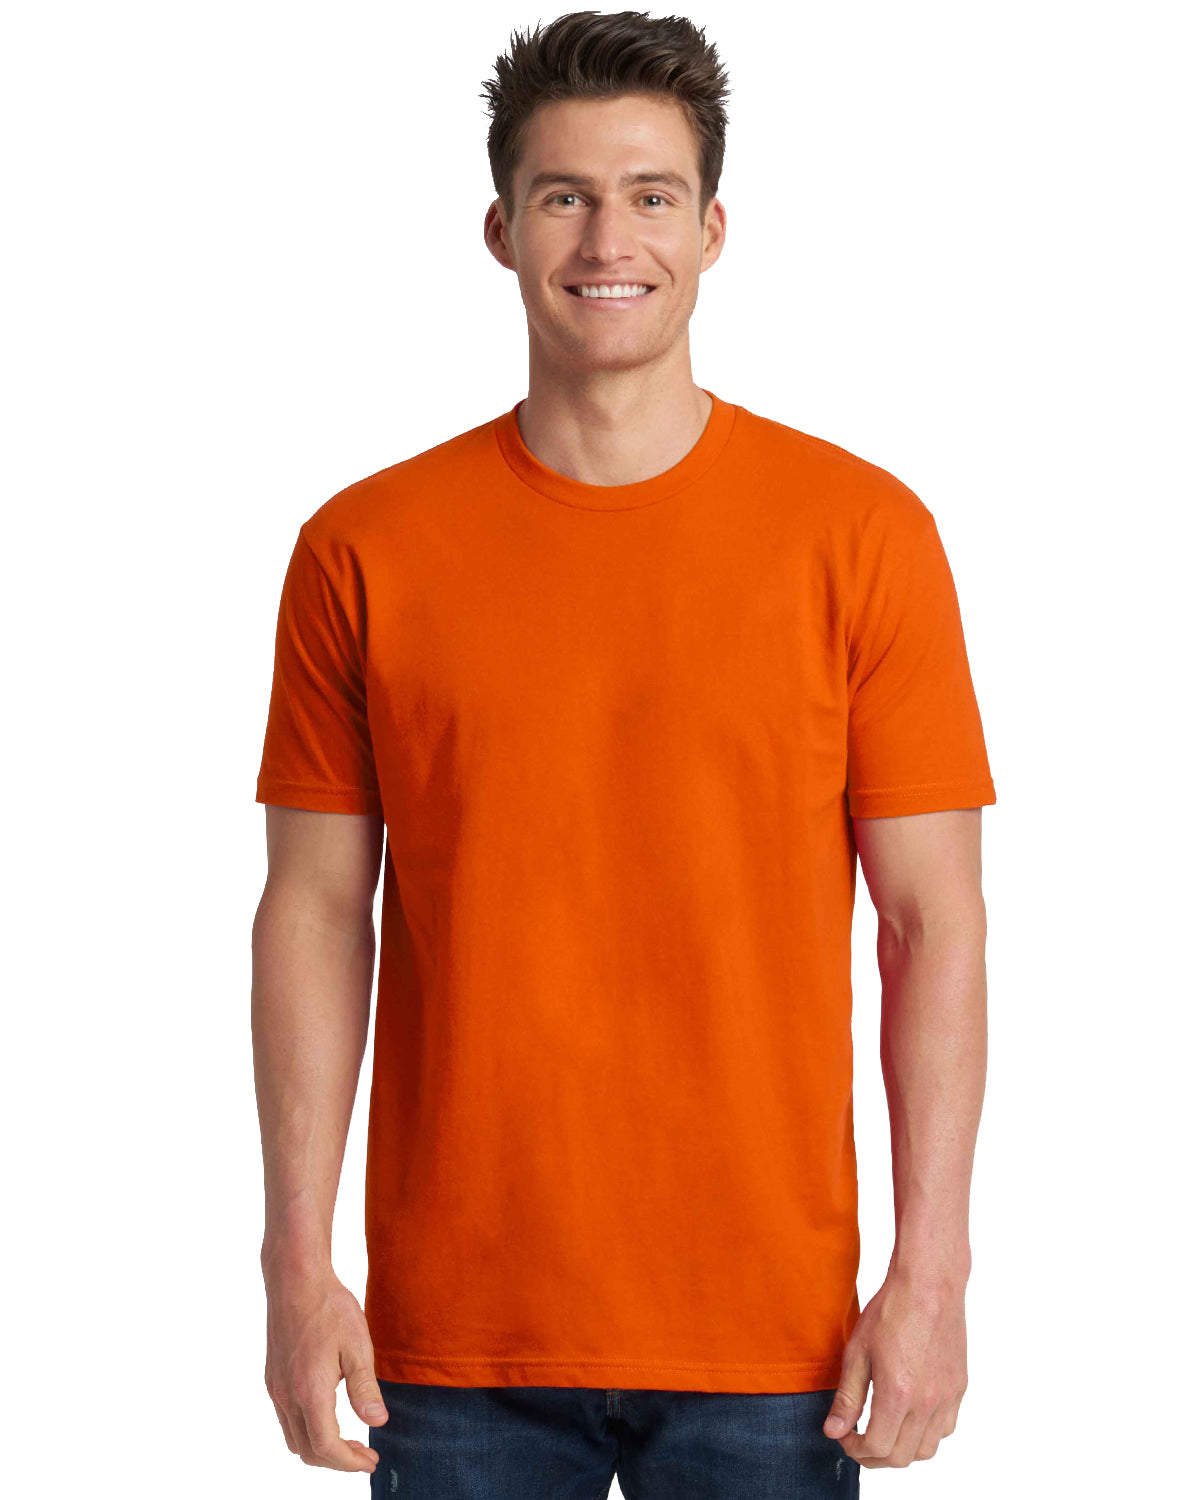 model wearing next level unisex cotton tee in classic orange